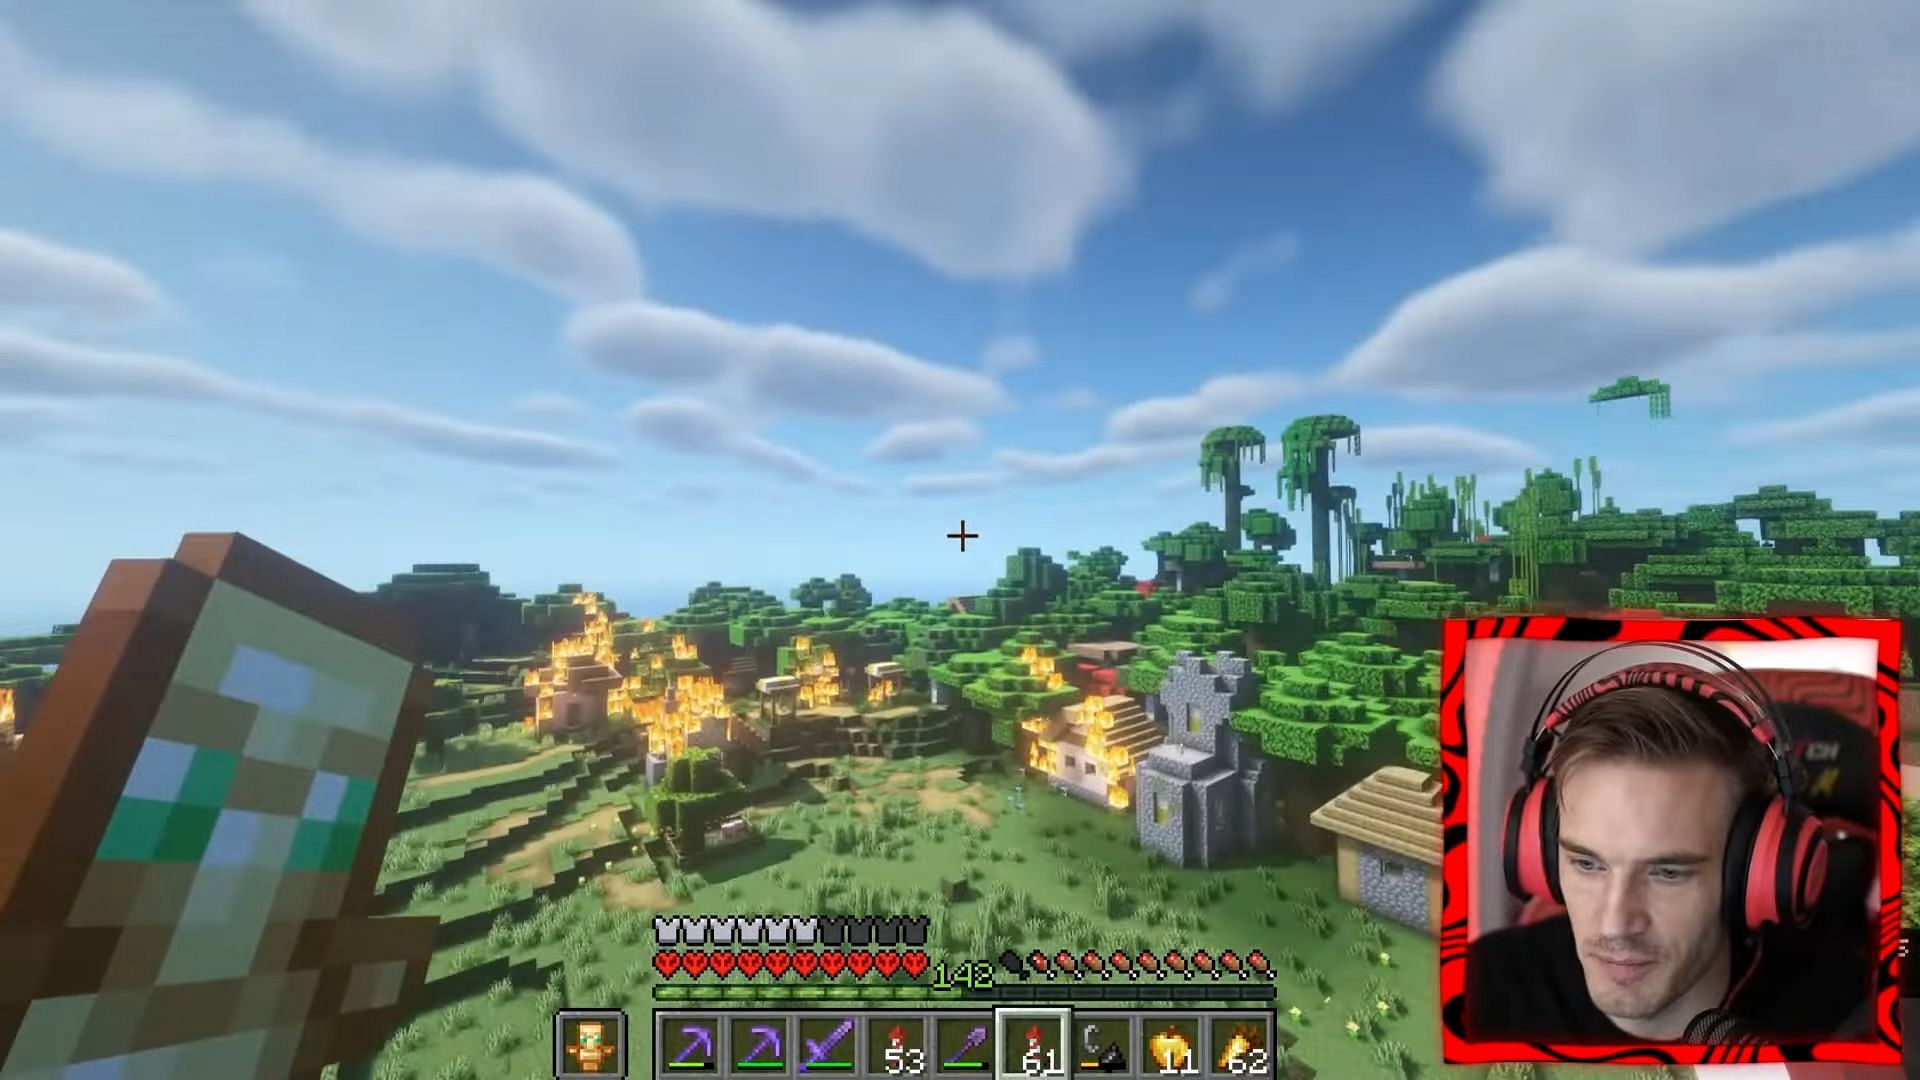 PewDiePie burns down a village (Image via YouTube/PewDiePie)